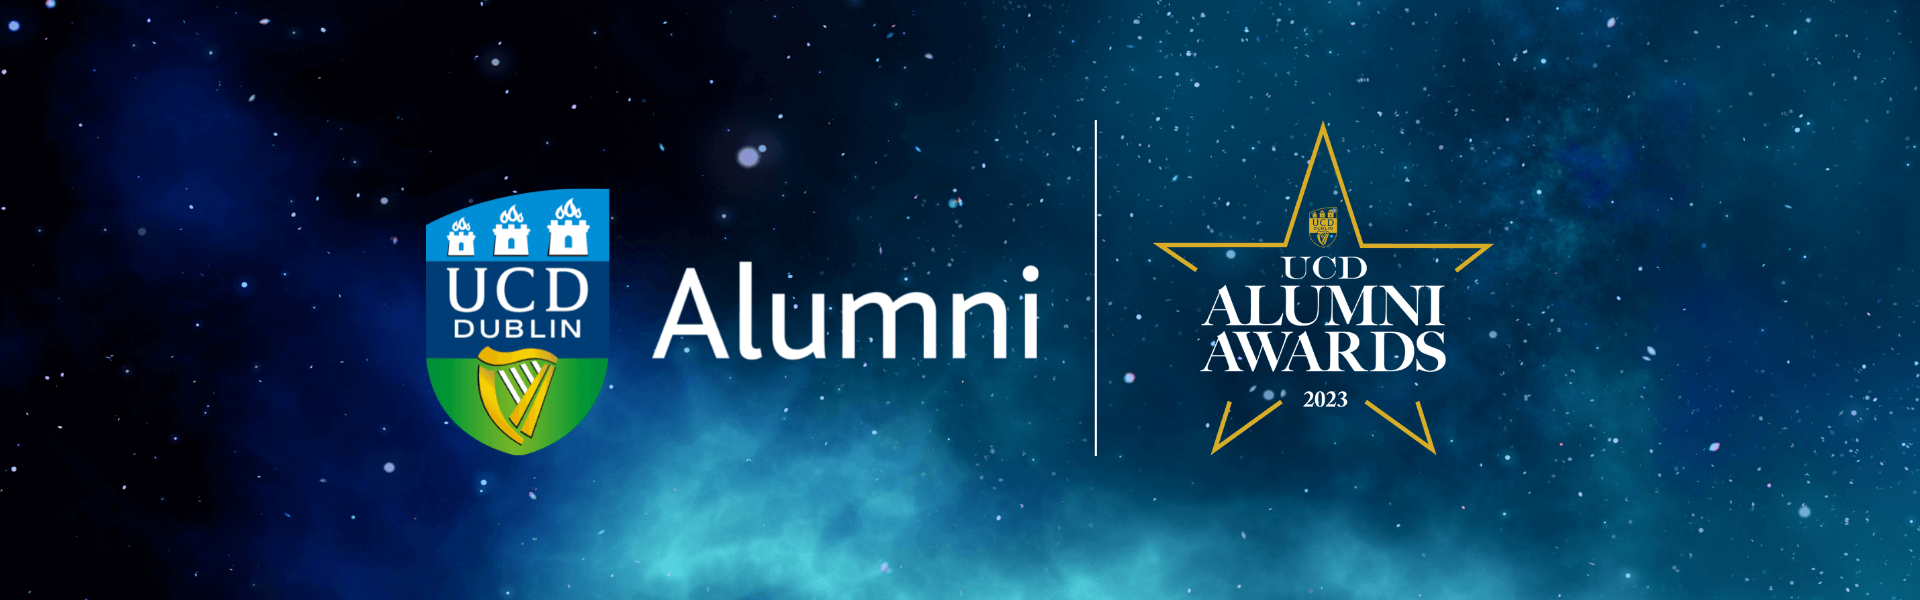 UCD Alumni Awards - Nomination s are Open